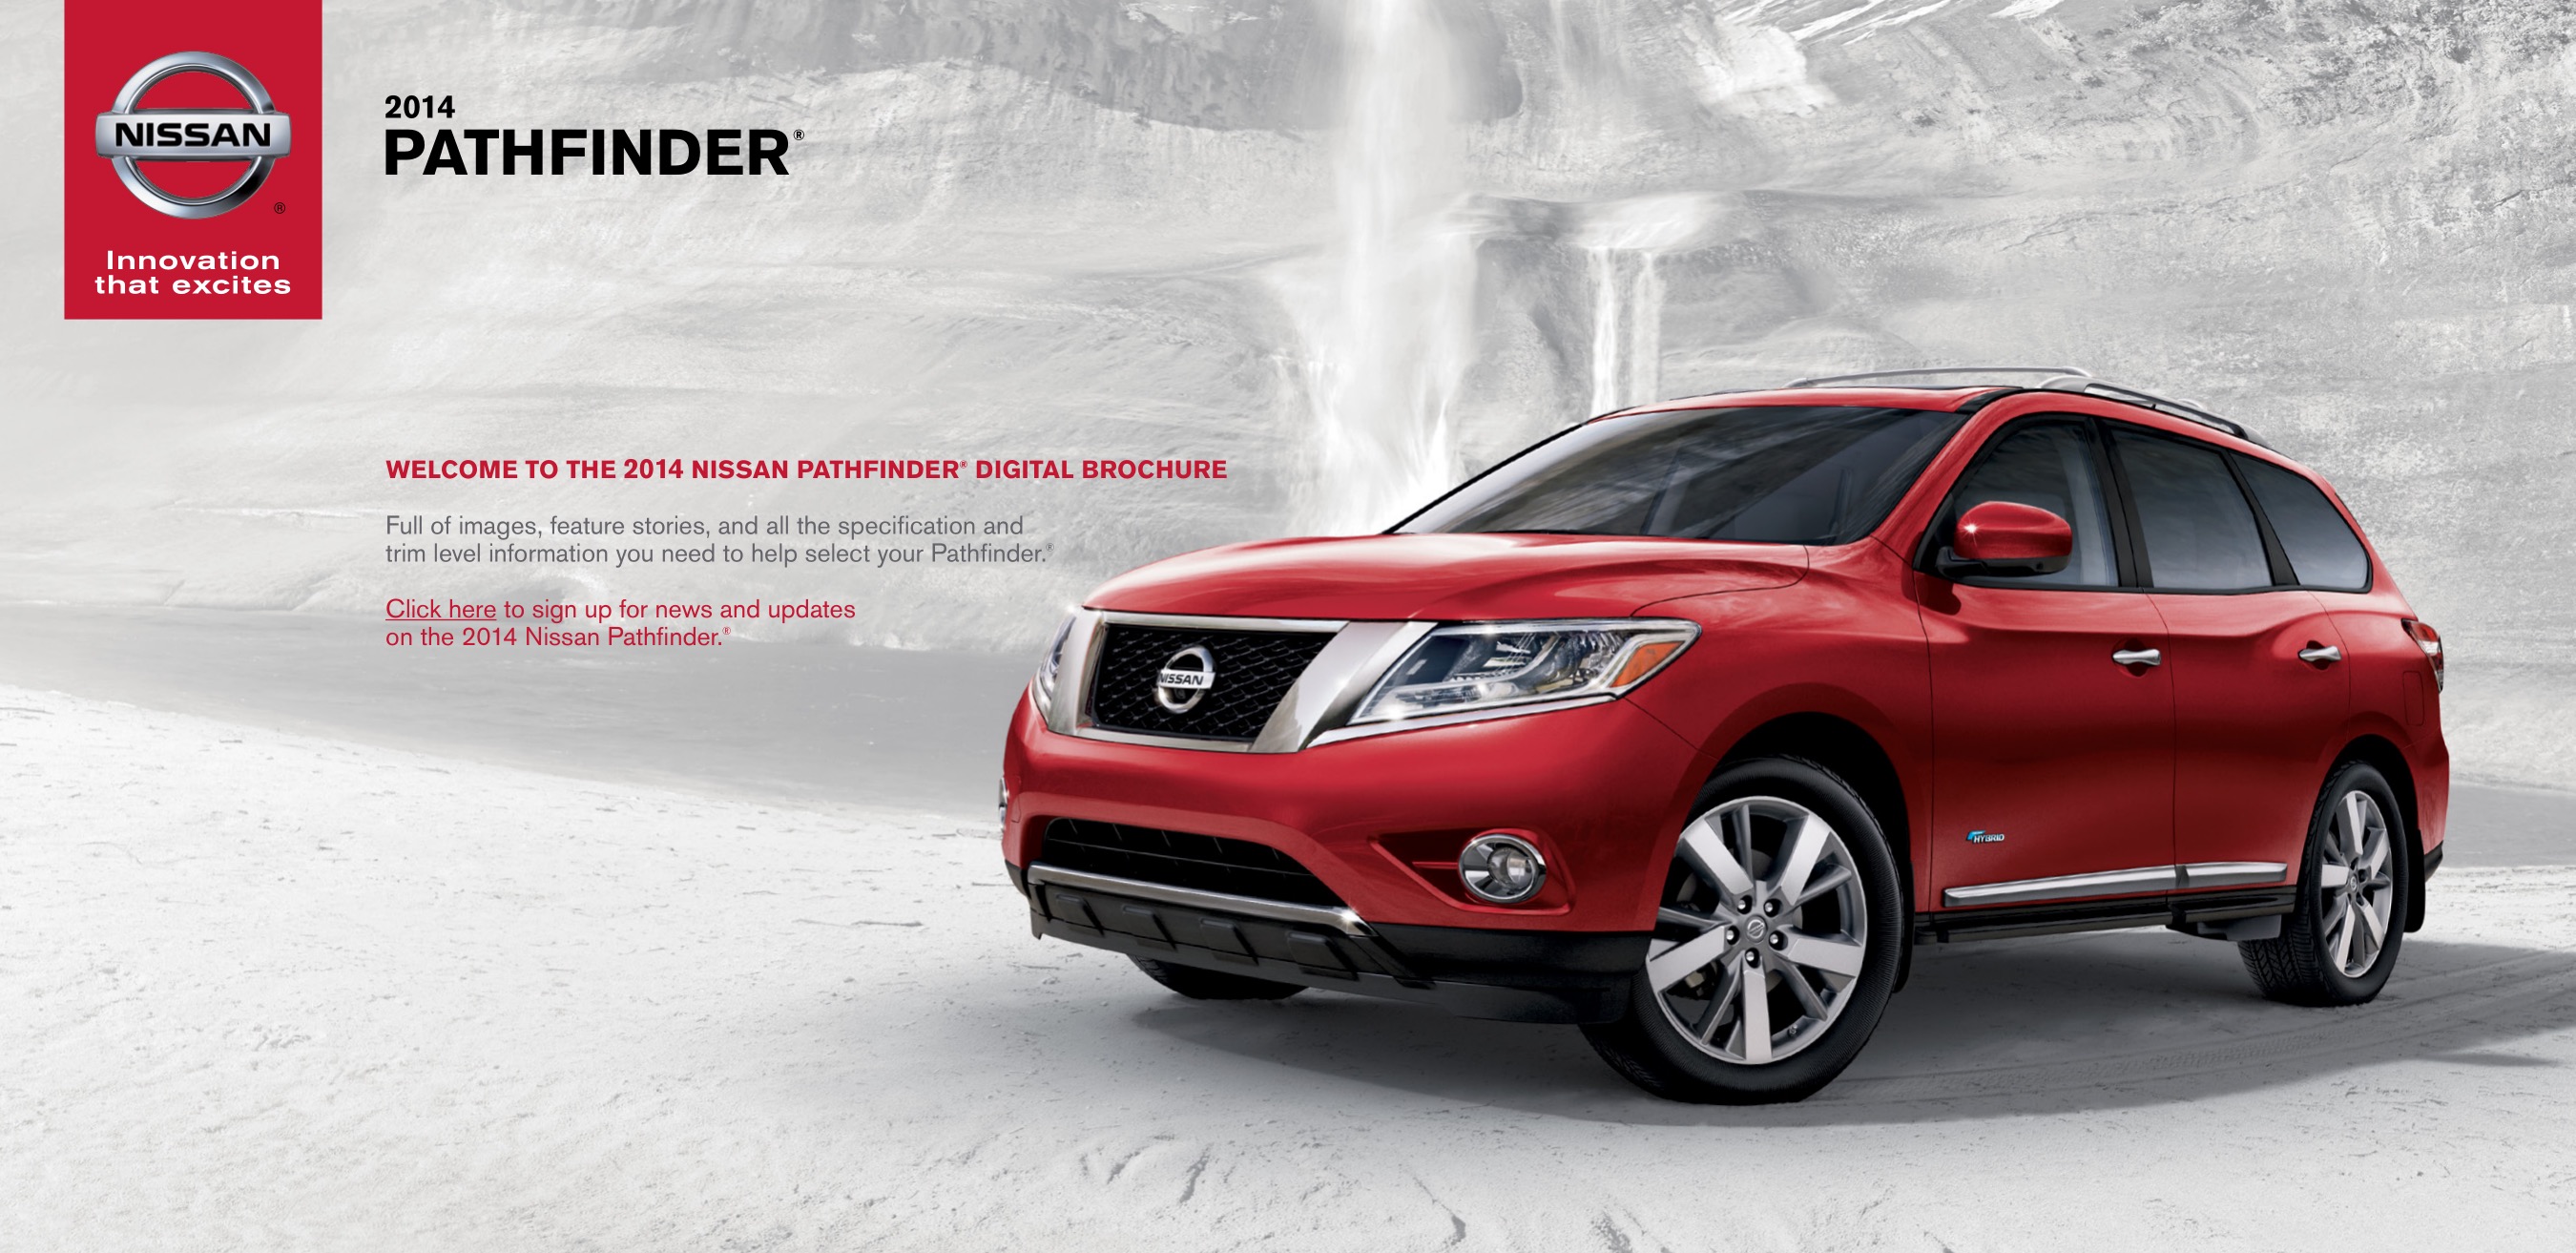 2014 Nissan Pathfinder Brochure